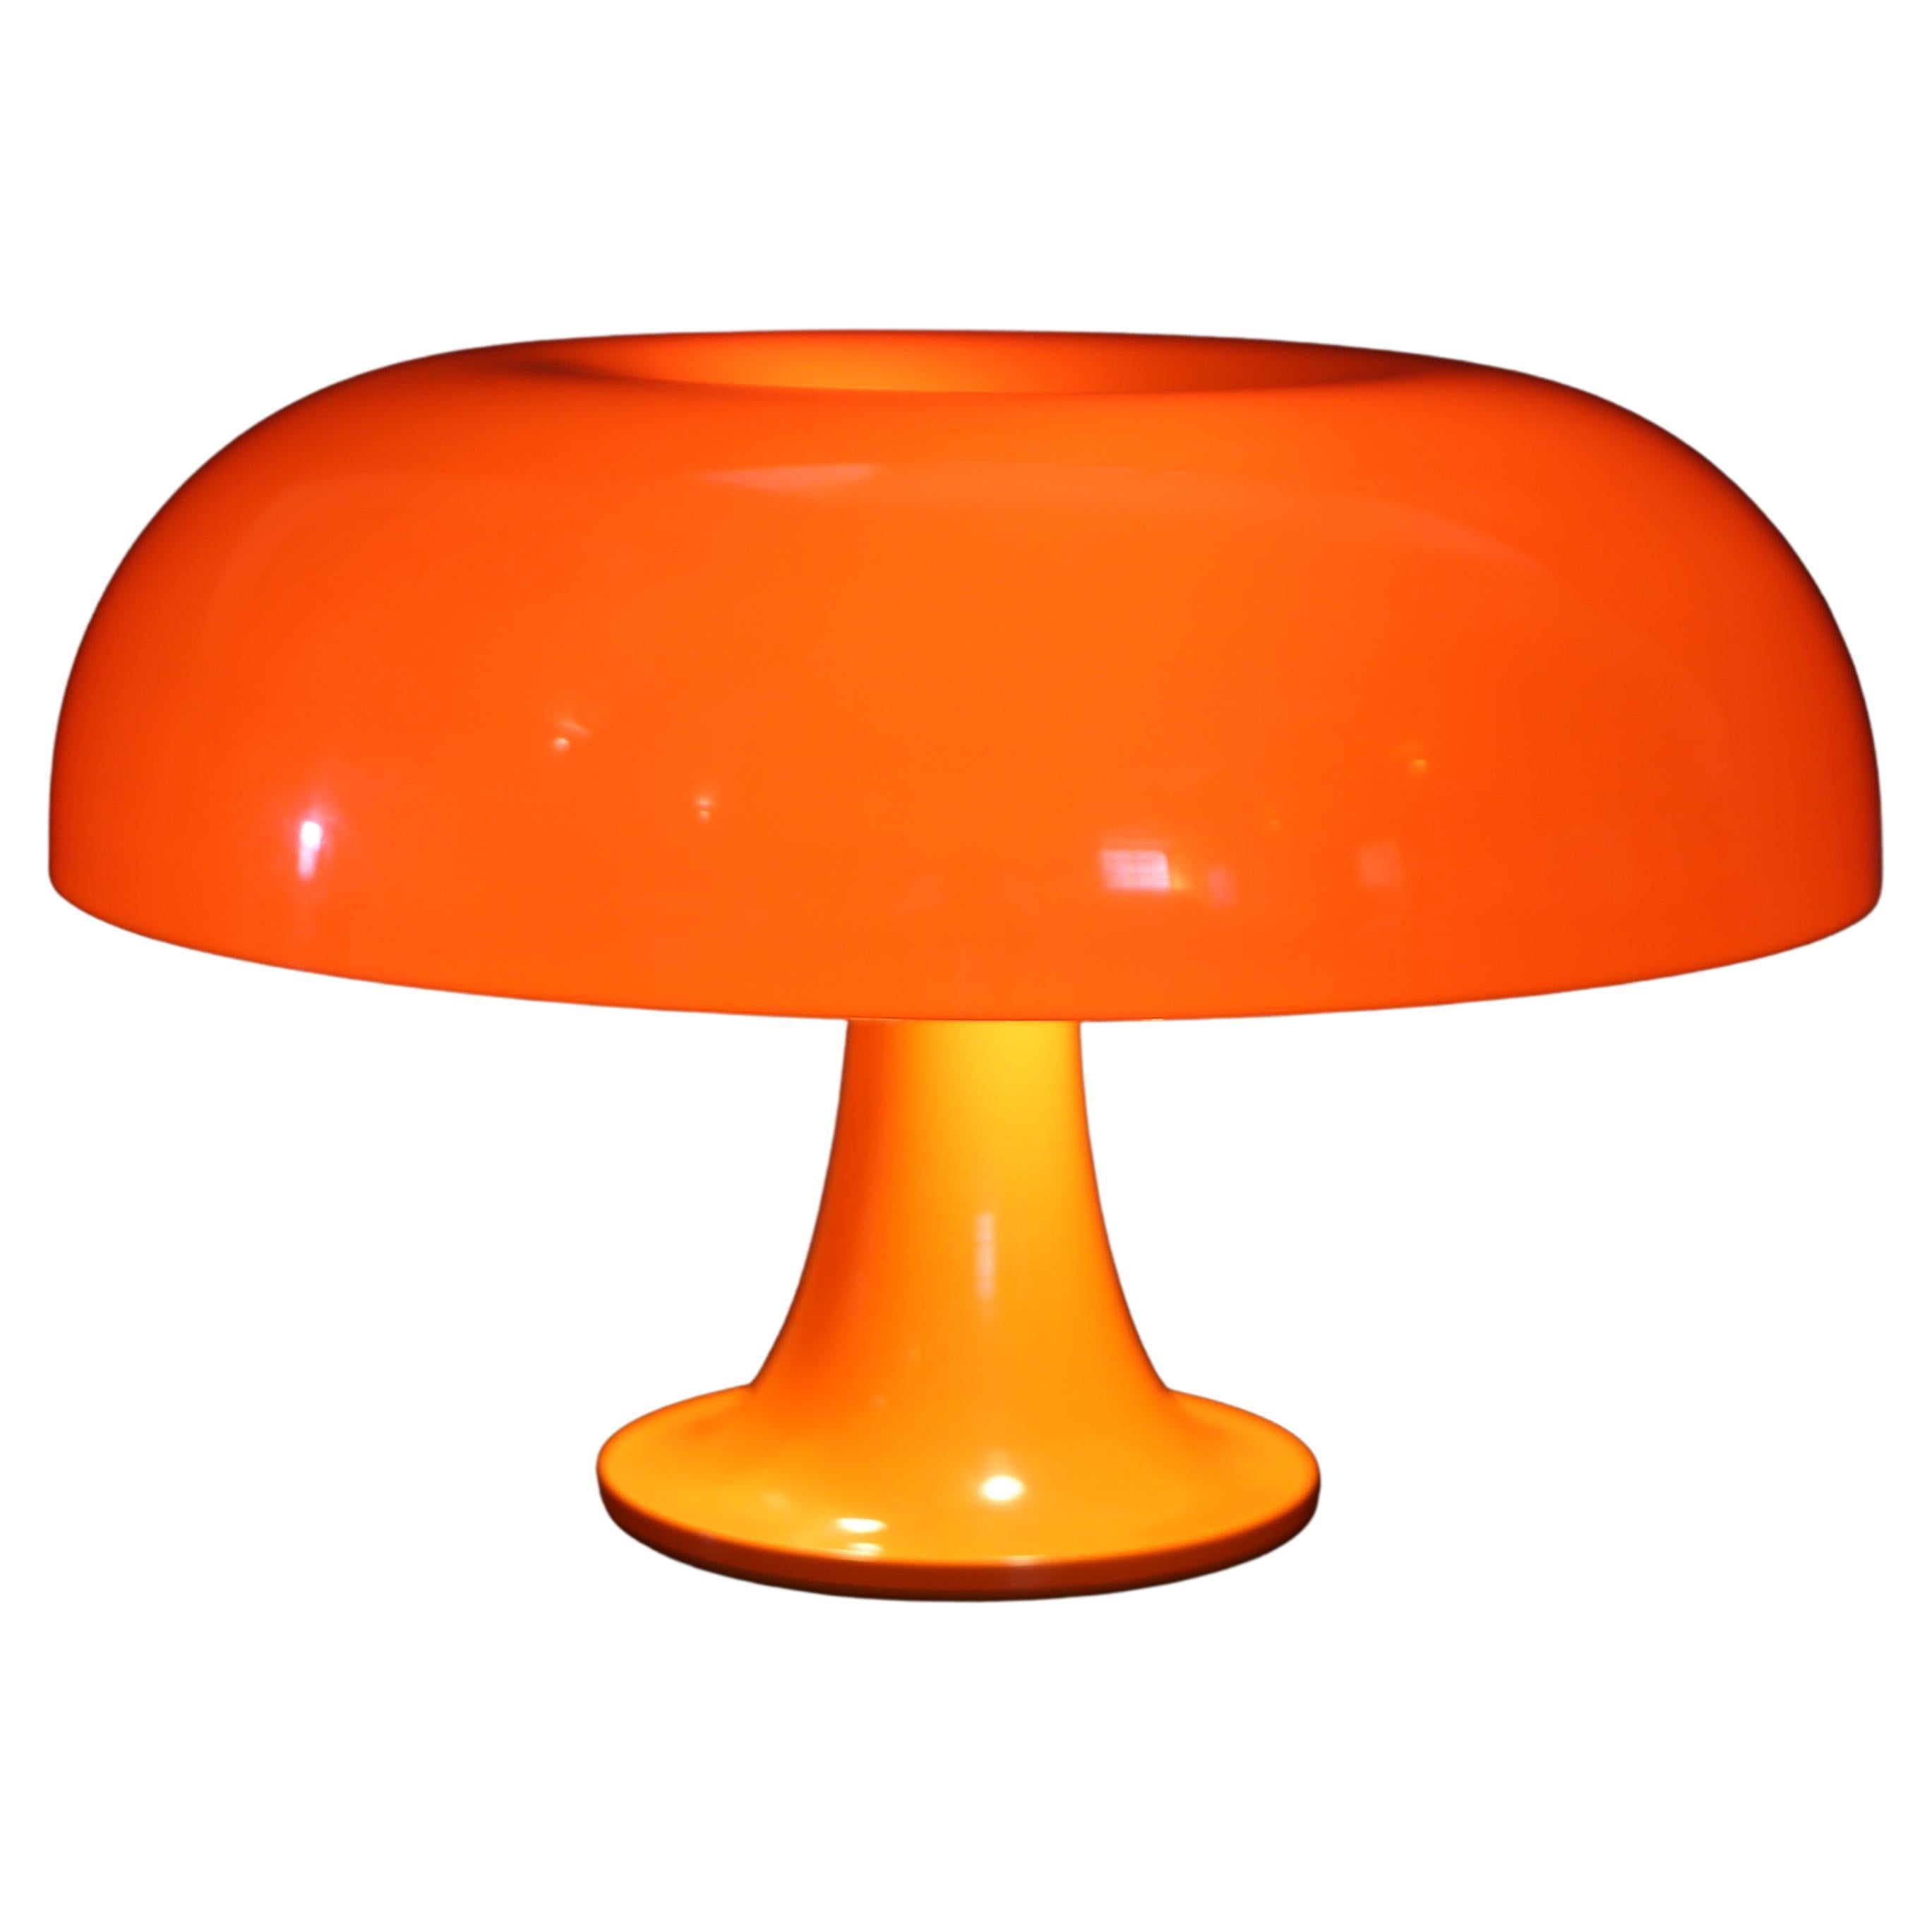 Giancarlo Mattioli  Nesso table lamp first edition artemide production 1960.